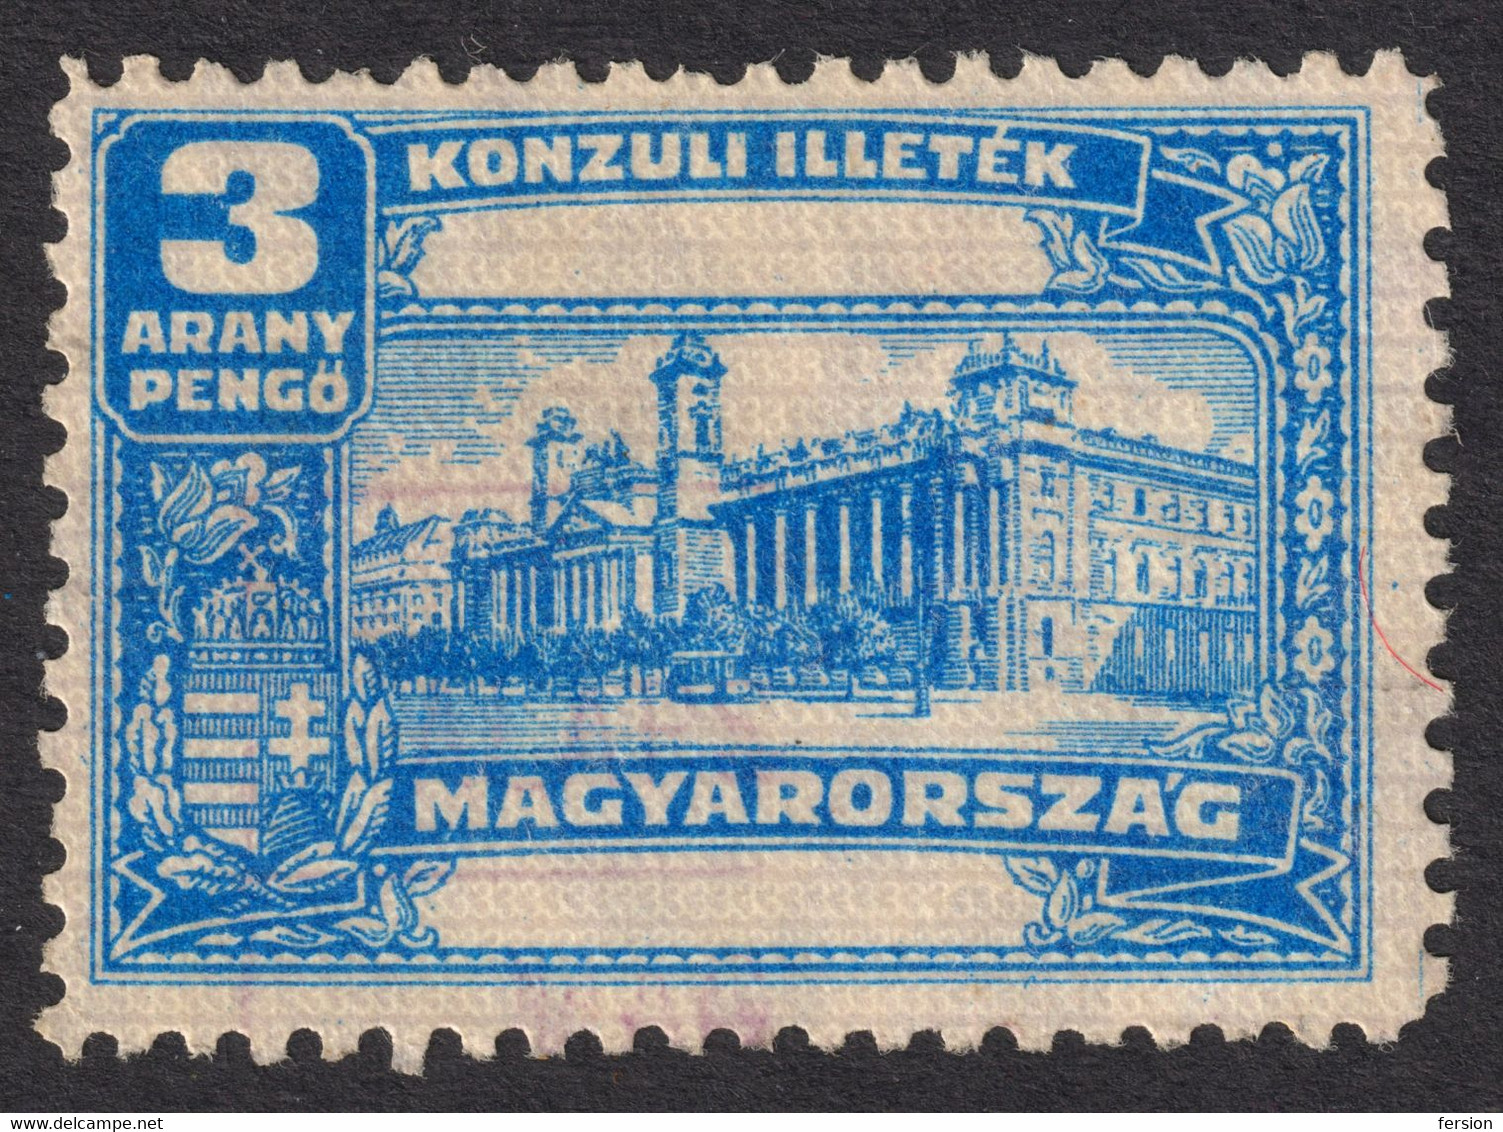 1931 - 1936 Hungary Ungarn Hongrie - Consular Revenue Tax Stamp - 3 A.P Aranypengo - BUDAPEST Stock Exchange Palace - Steuermarken